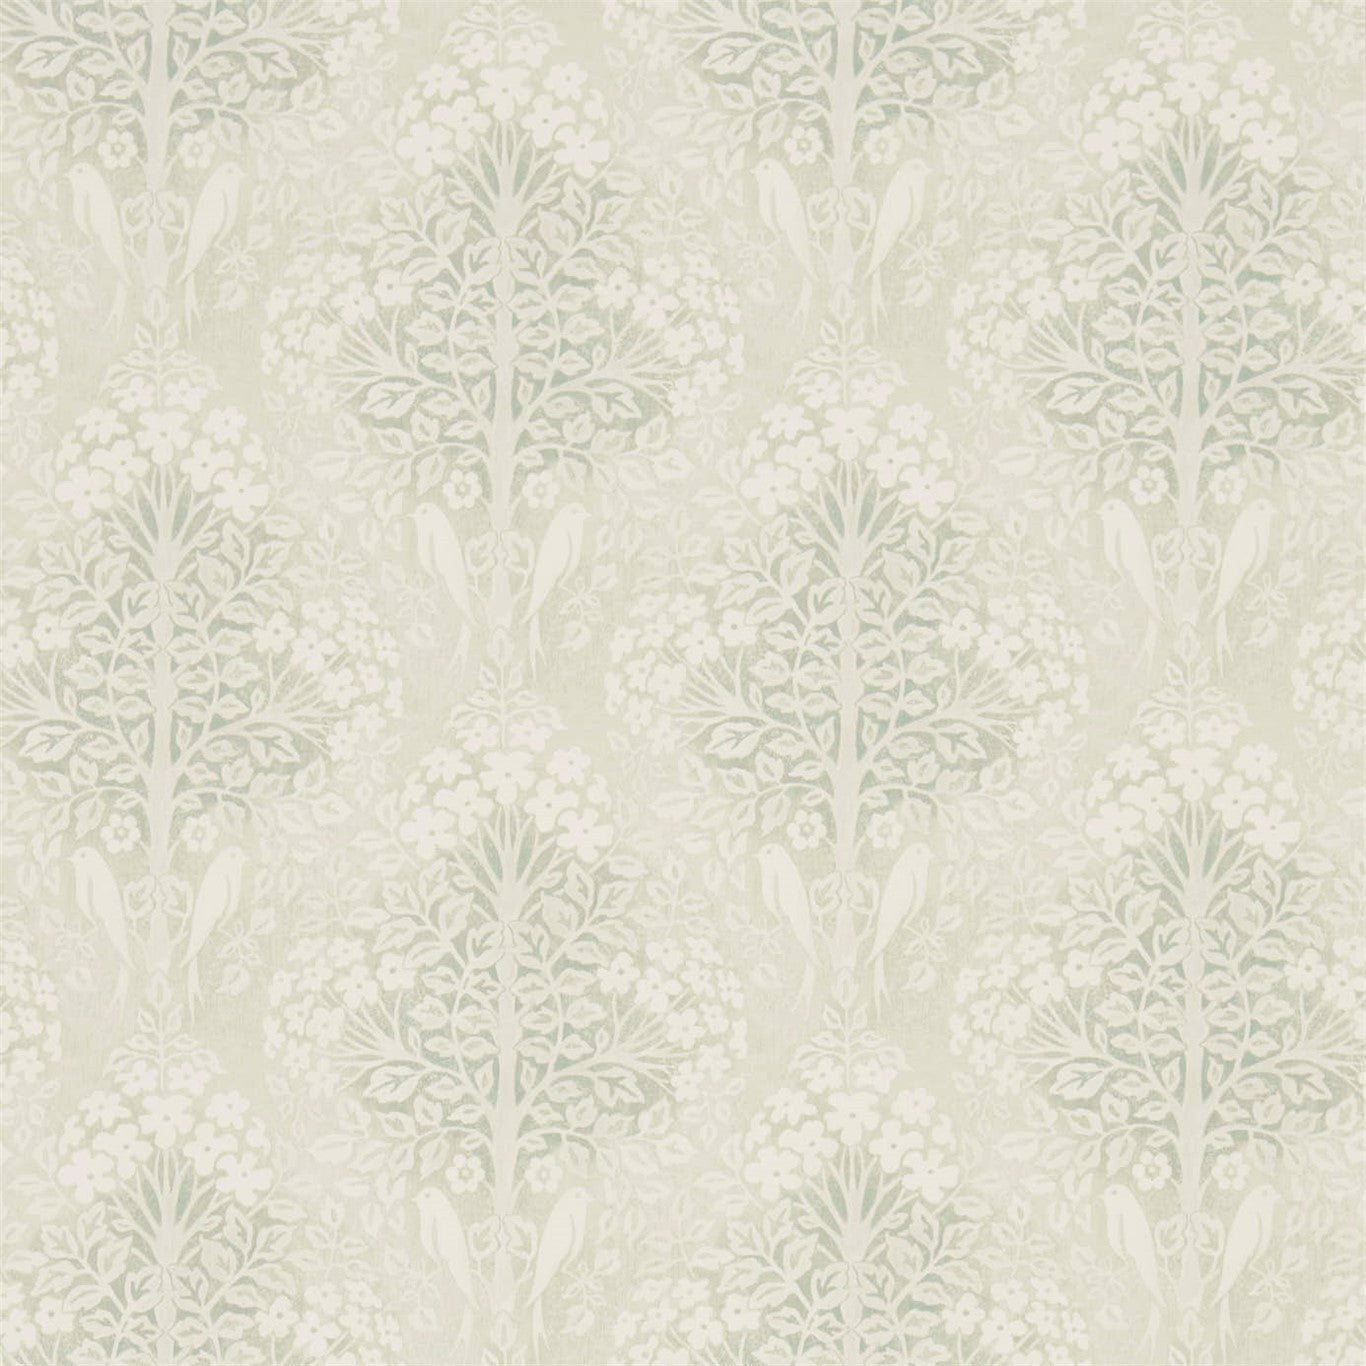 Lerena Willow Wallpaper DDAM216400 by Sanderson